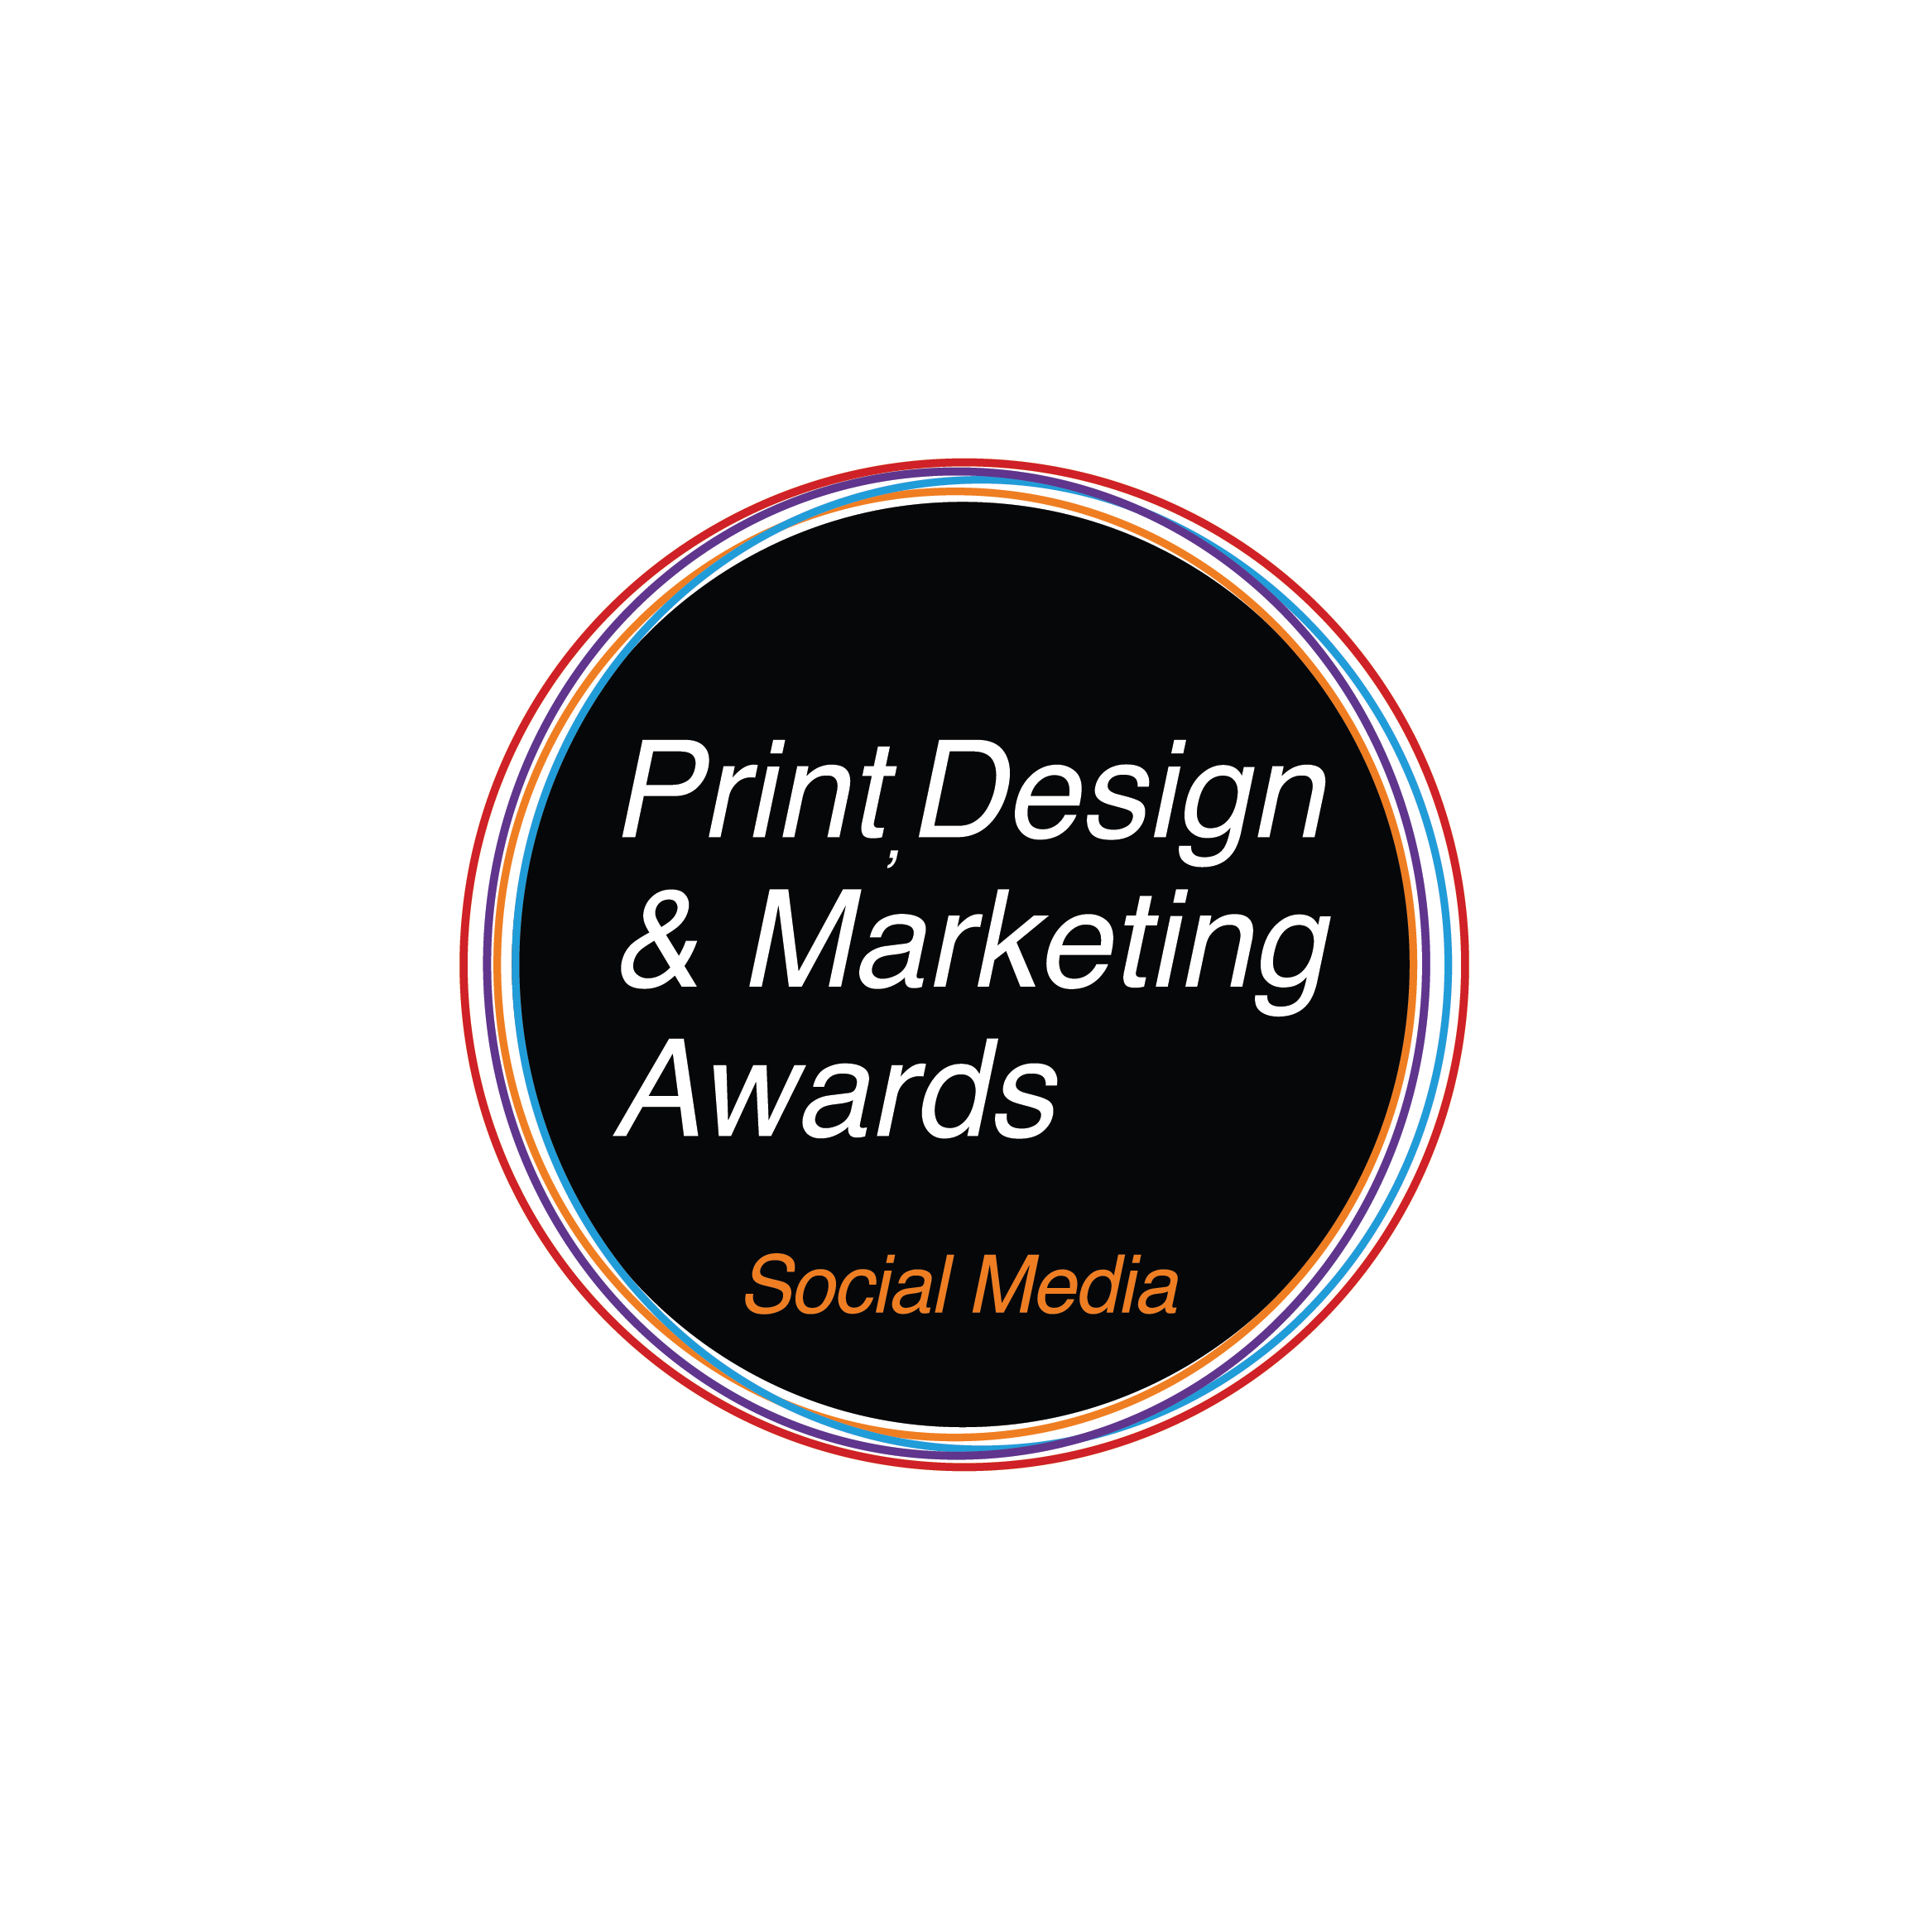 Print, Design & Marketing Awards for Social Media logo